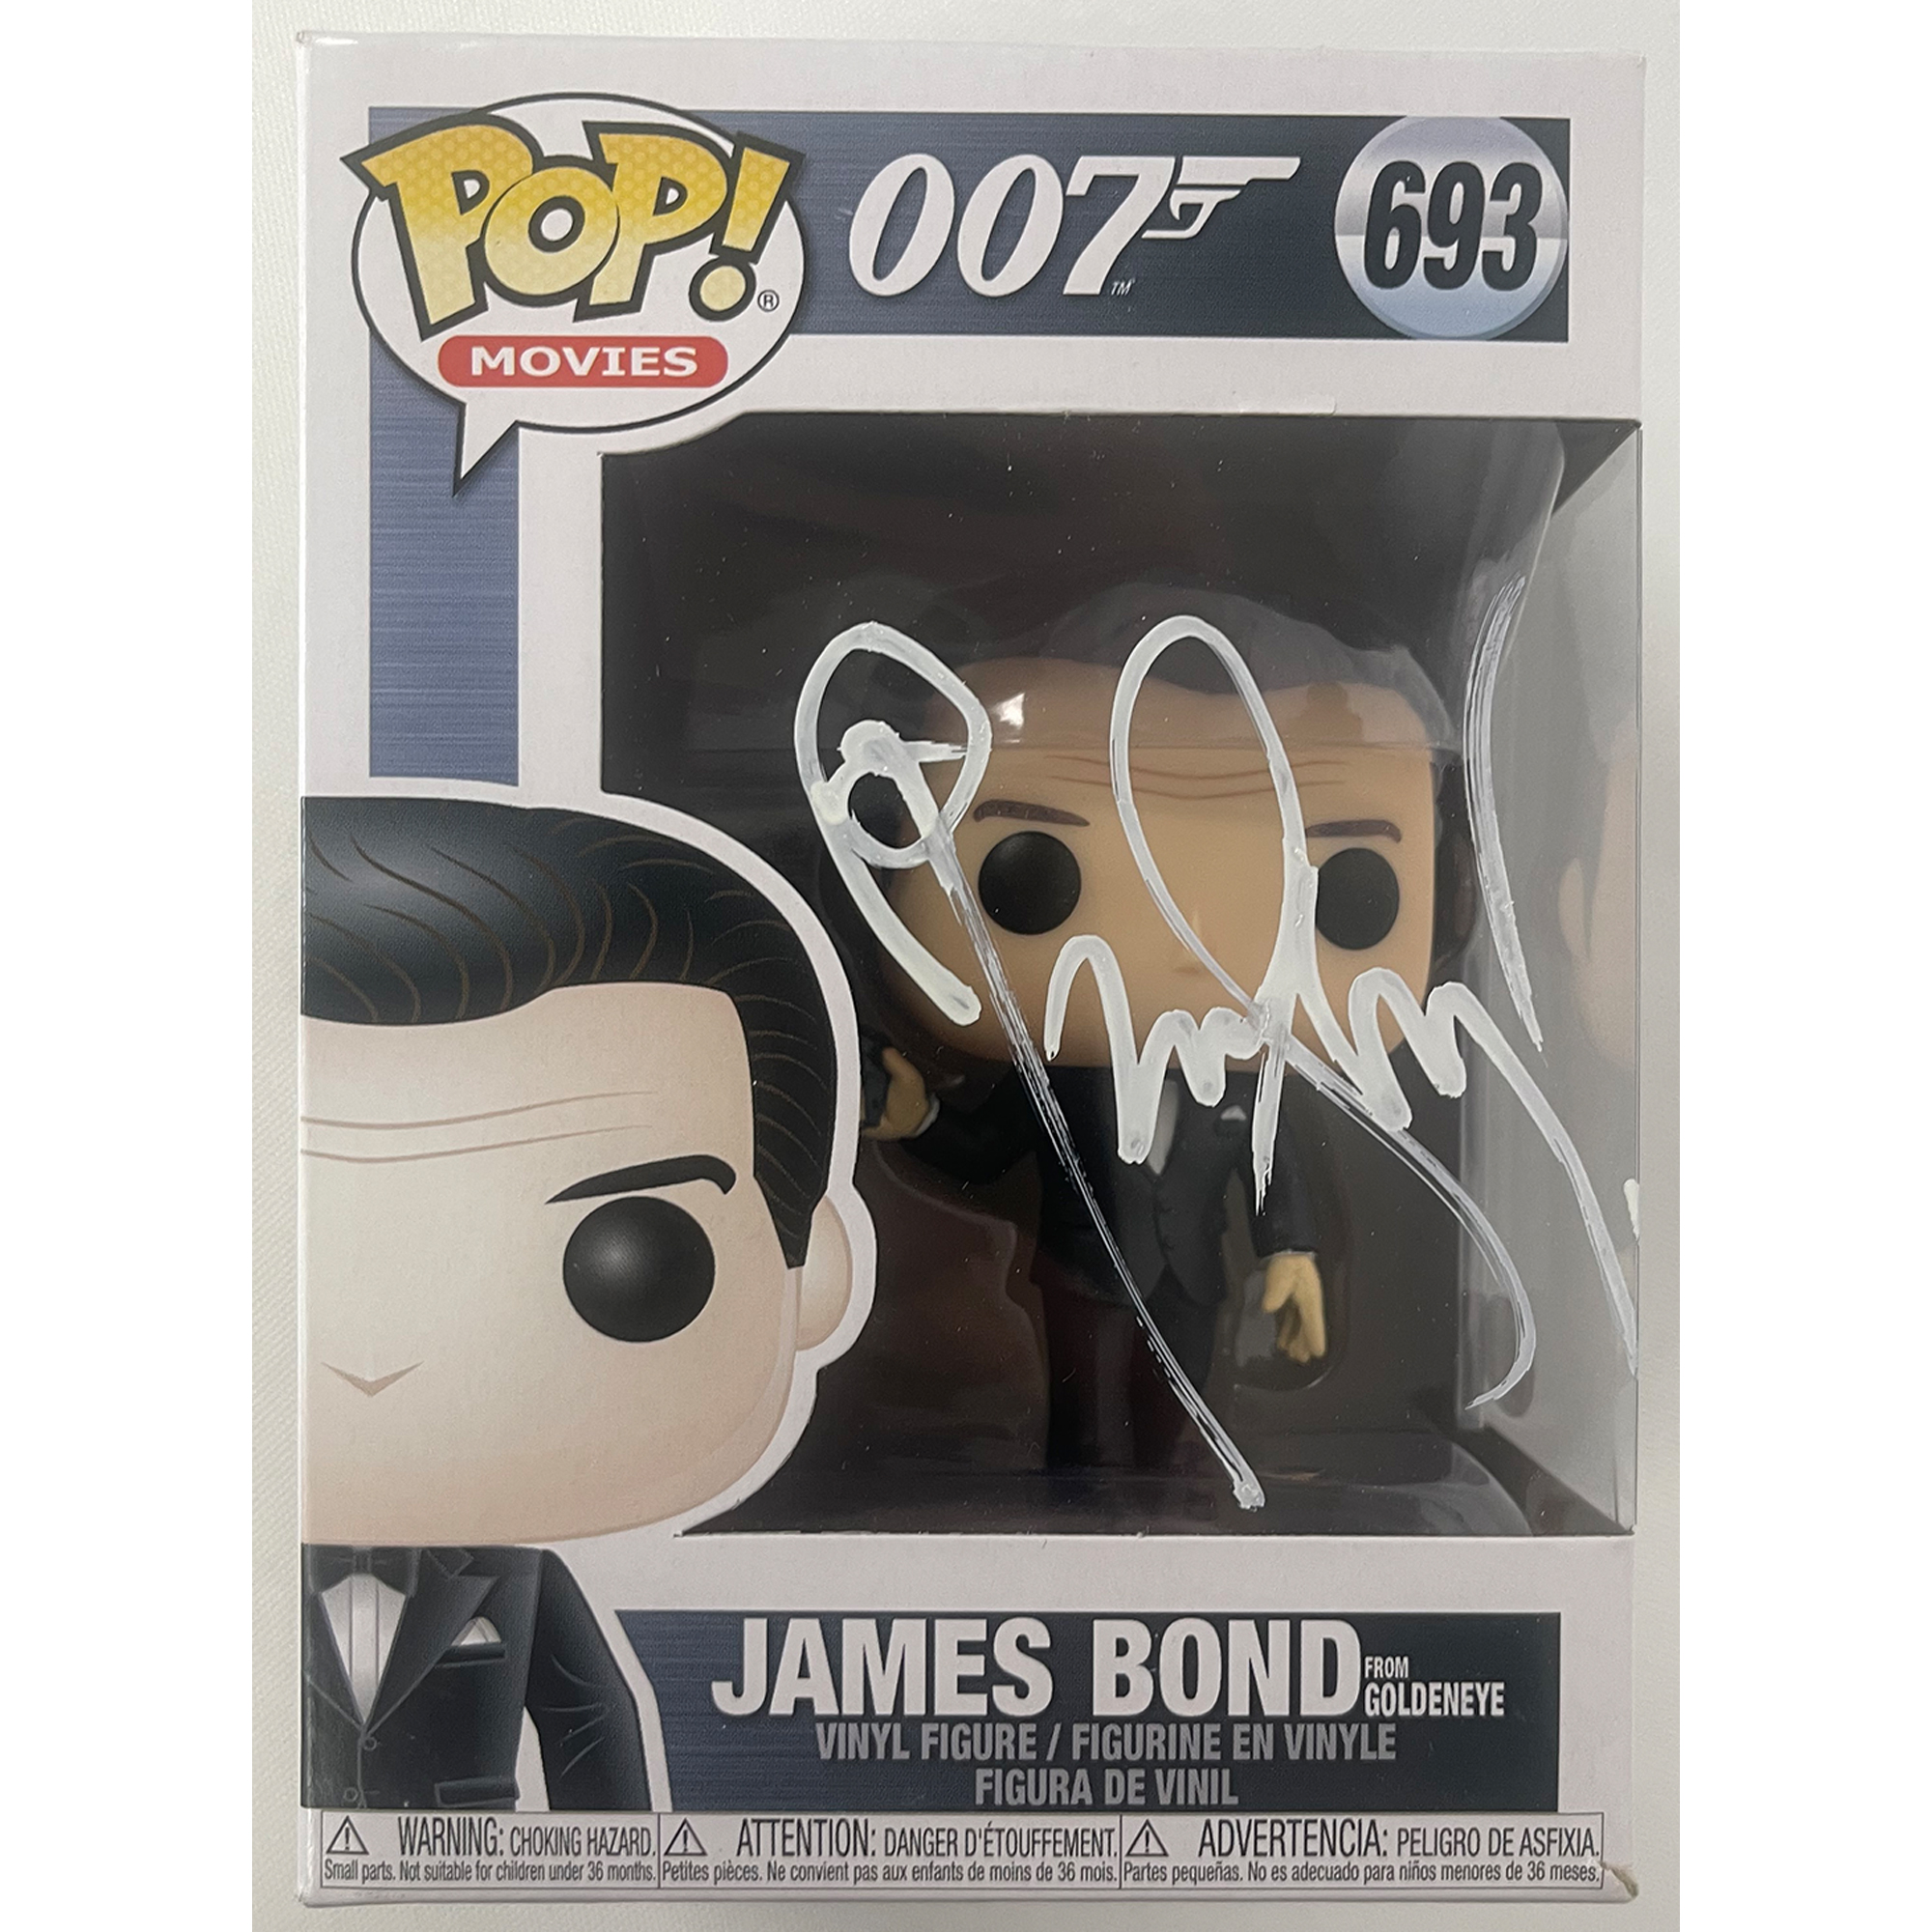 Pierce Brosnan Signed “007” James Bond #693 Funko Pop! Vin...